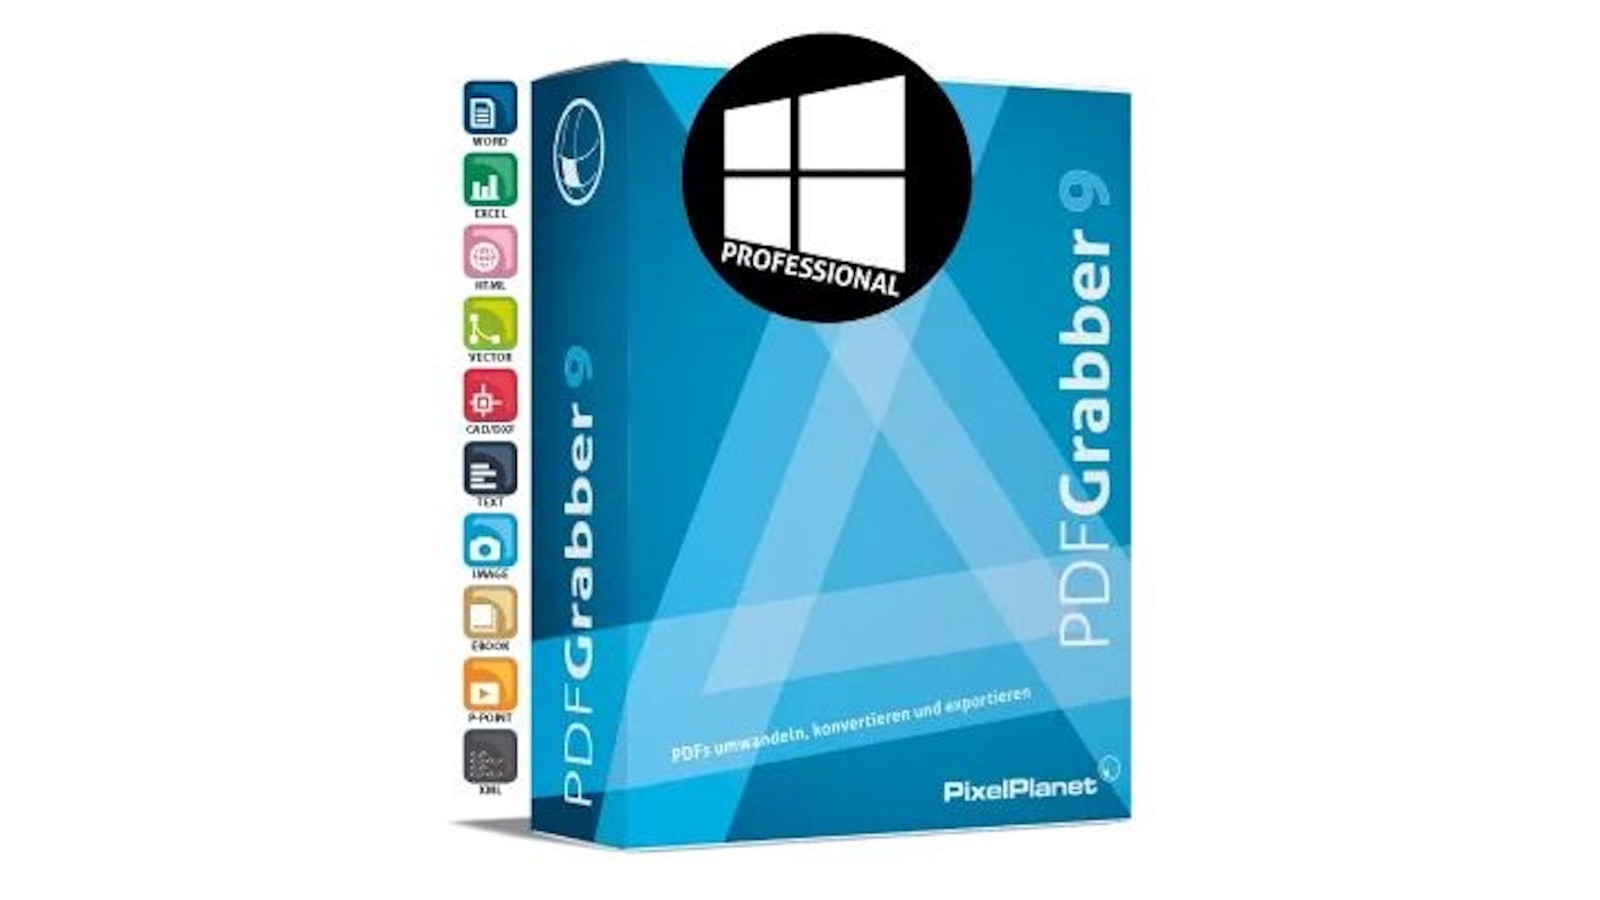 PixelPlanet PdfGrabber 9 Professional Network Licence Key (Lifetime / 5 Users) 7.74 usd